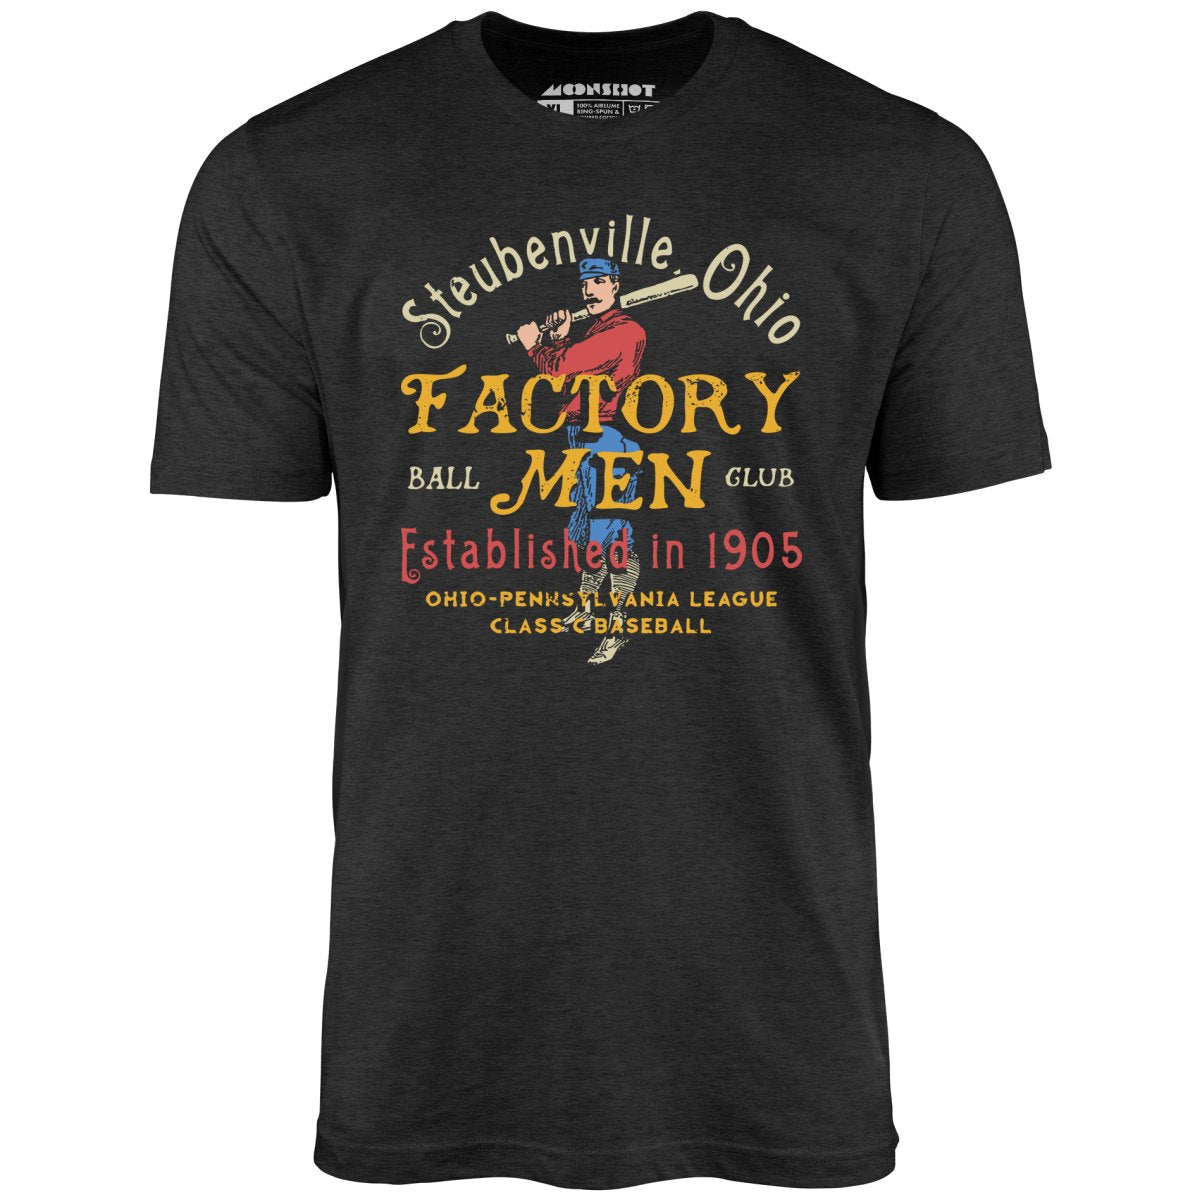 Steubenville Factory Men - Ohio - Vintage Defunct Baseball Teams - Unisex T-Shirt